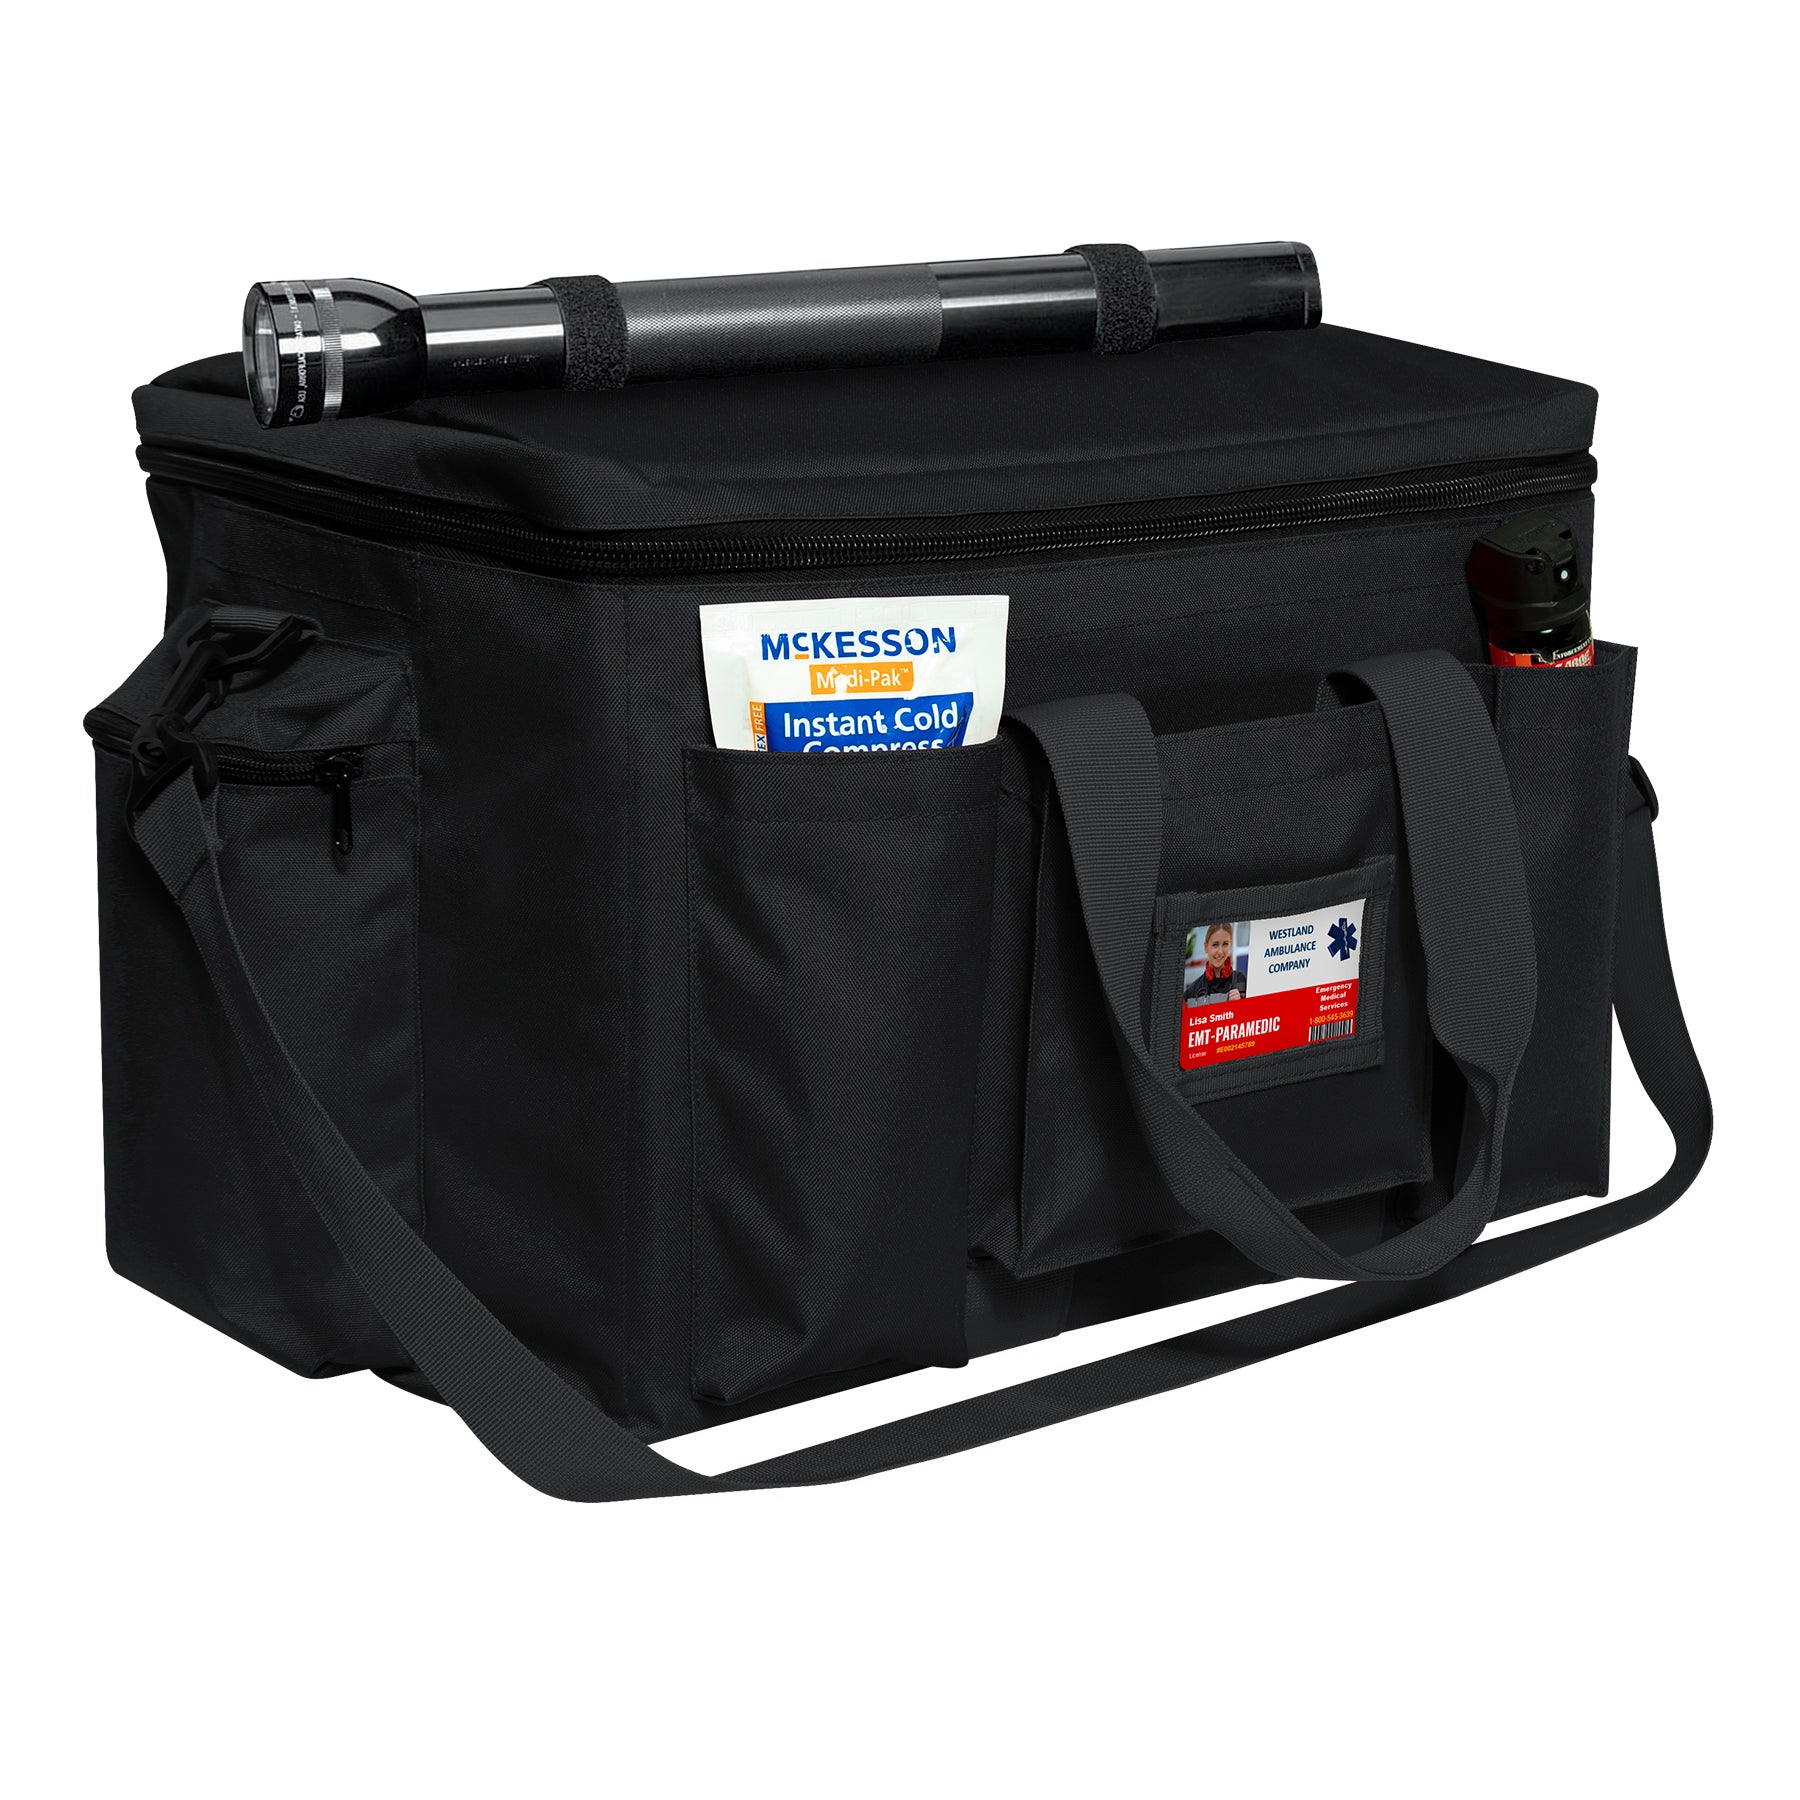 Rothco Police Equipment Bag - Tactical Choice Plus